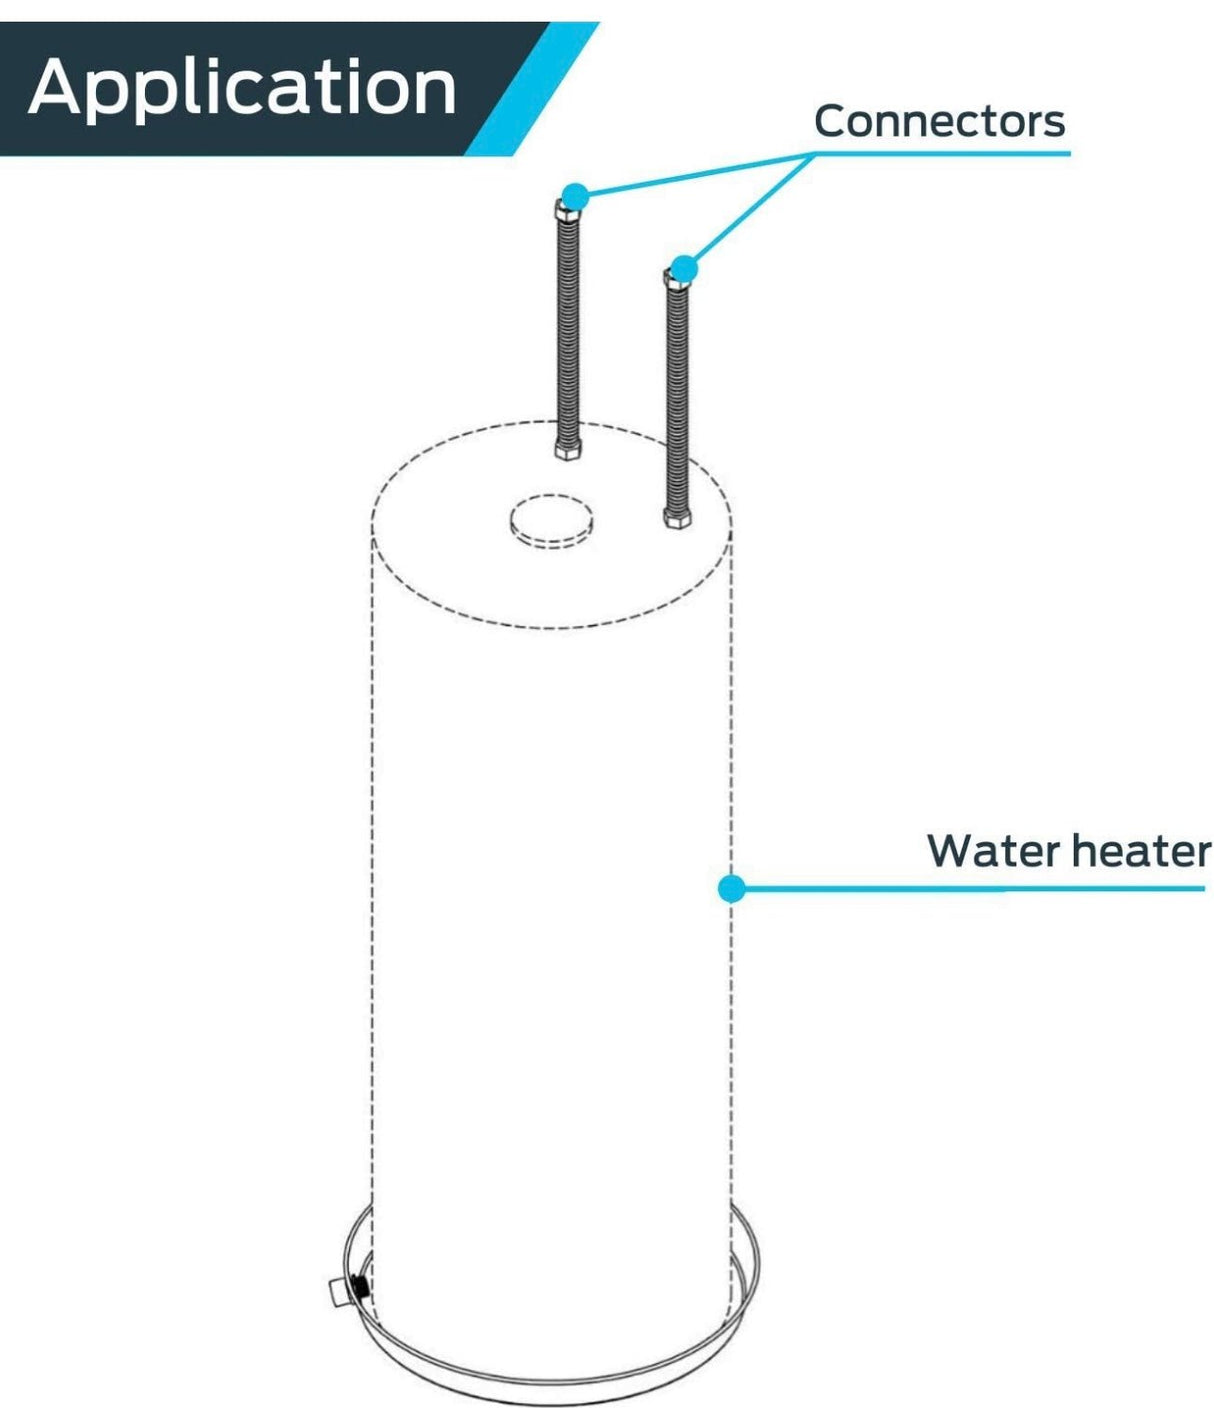 HoldRite QuickFlex 2 Inch FIP x 2 Inch FIP x 18 Inch Water Heater Connector